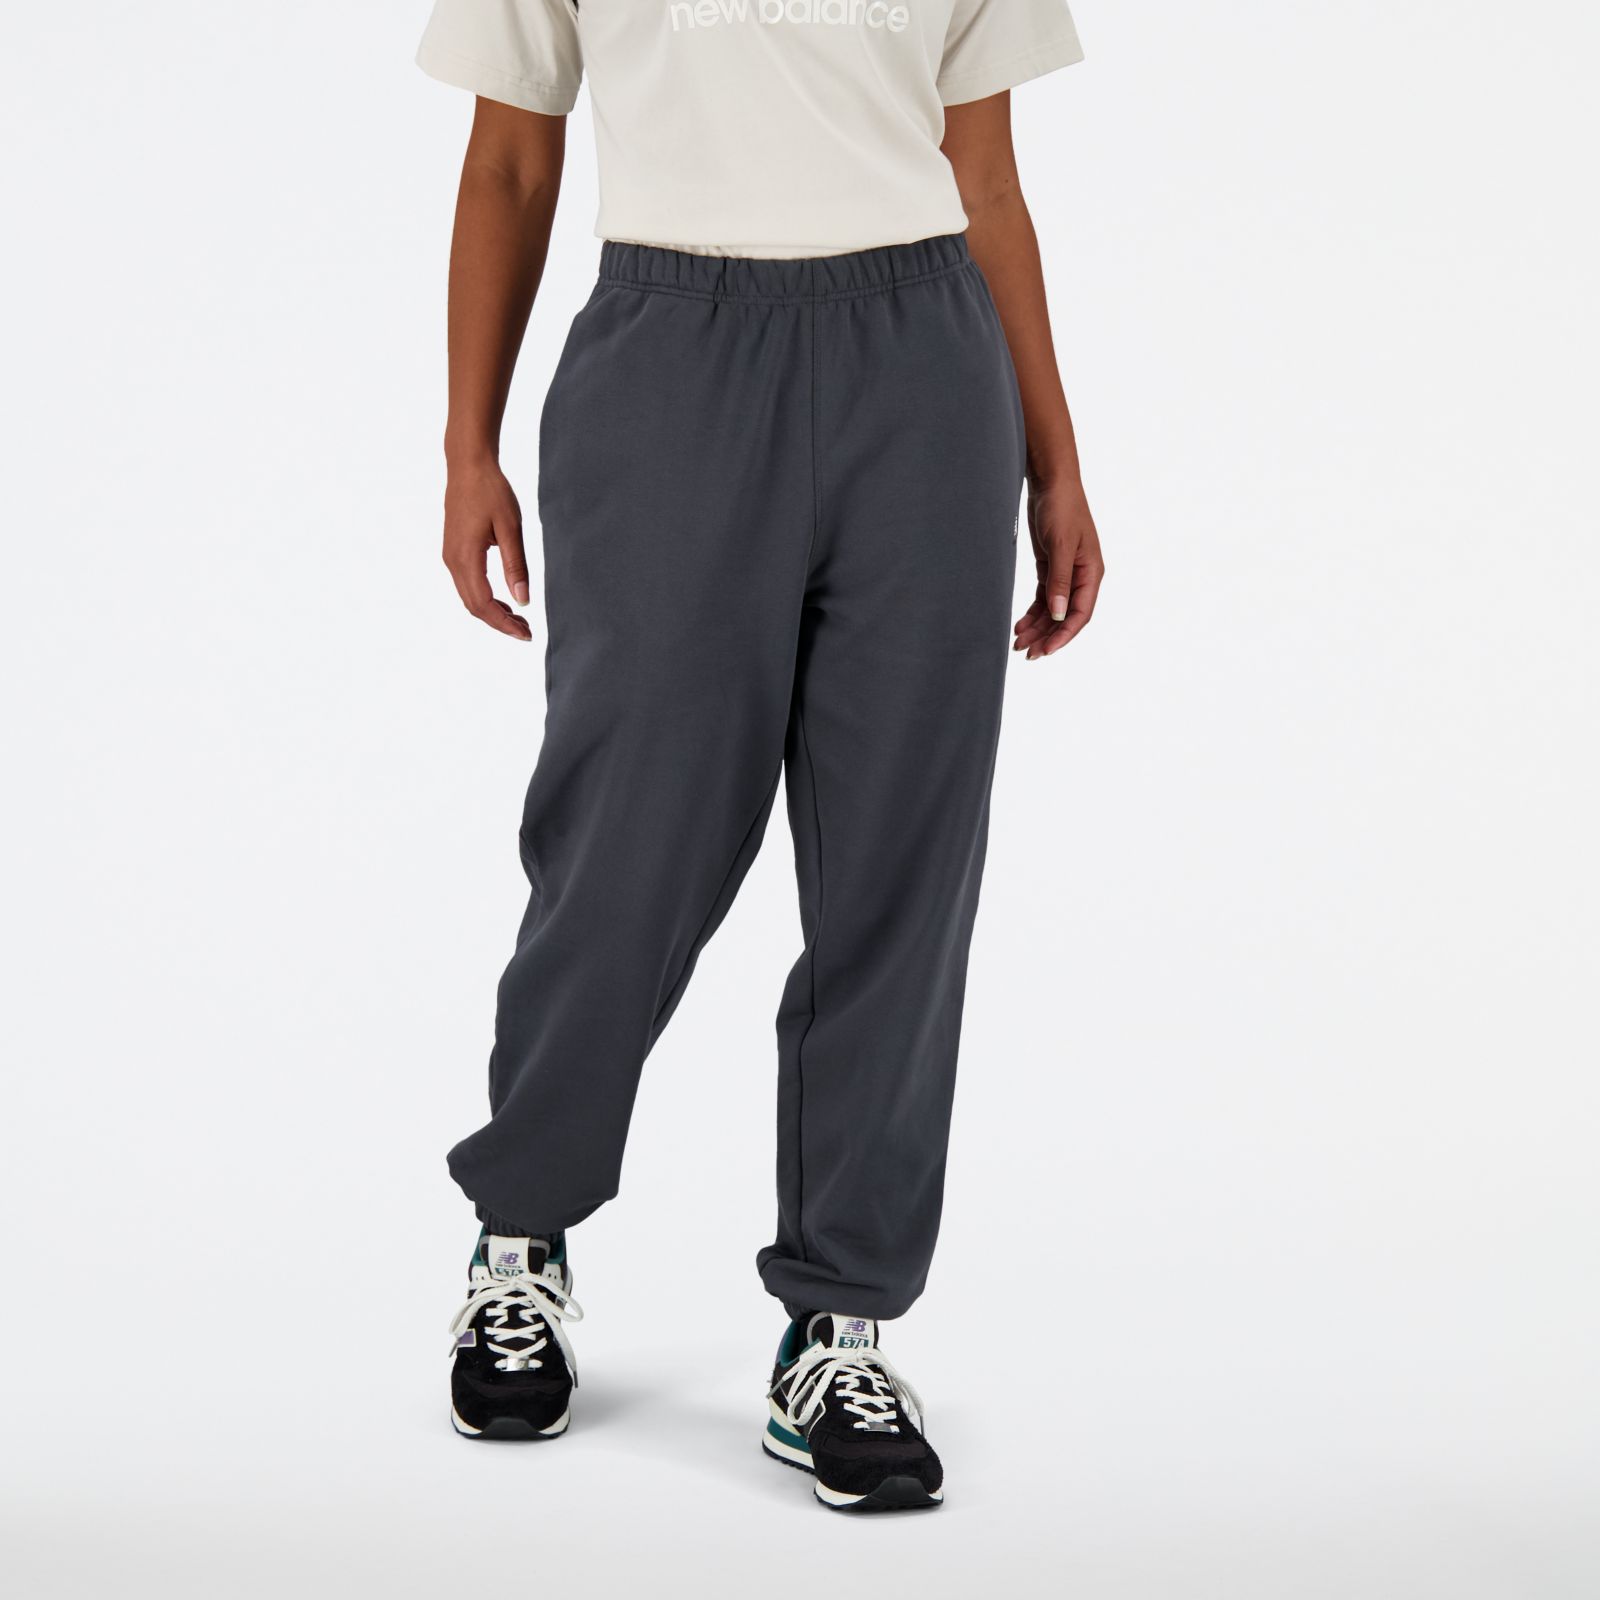 Sport Essentials Premium Fleece Pant - New Balance